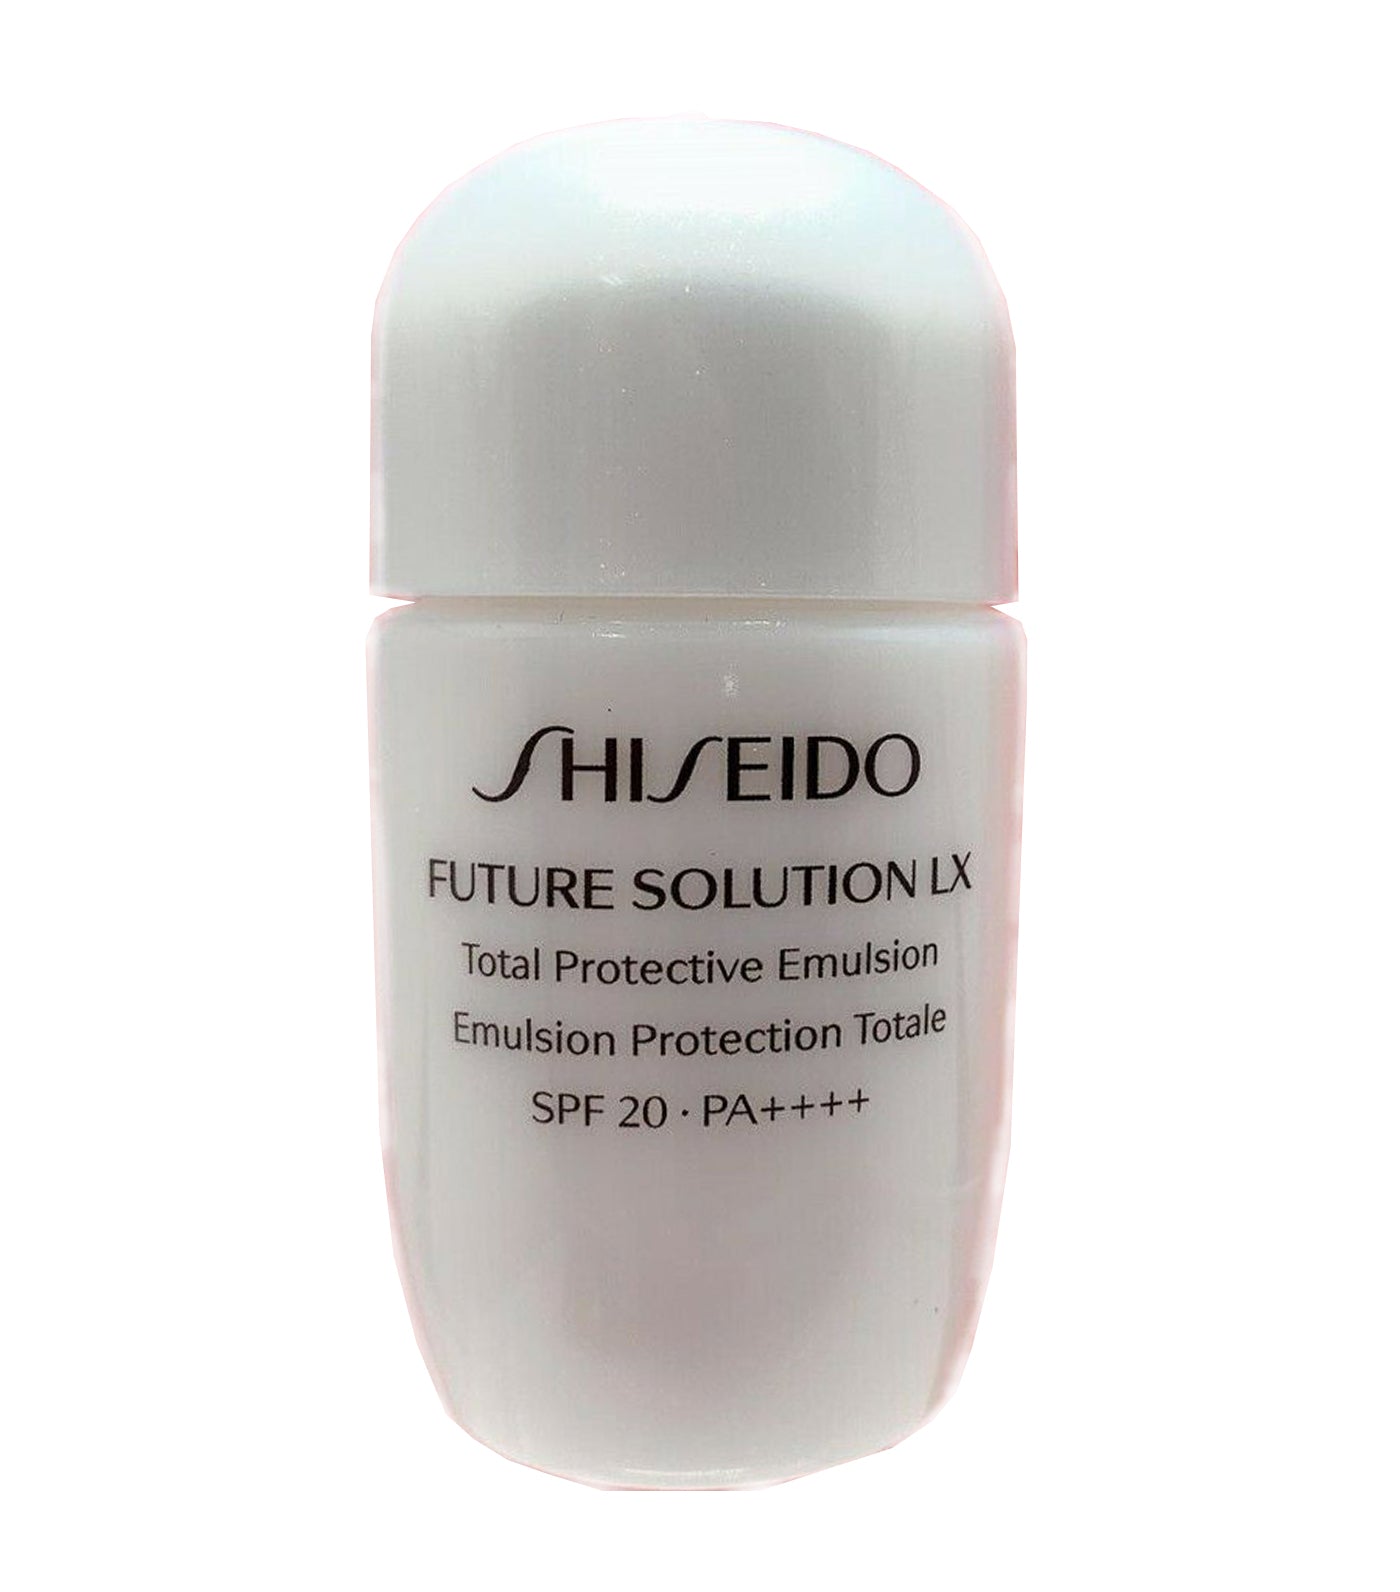 Shiseido Free Future Solution LX E Total Protective Emulsion SPF 20 15ML